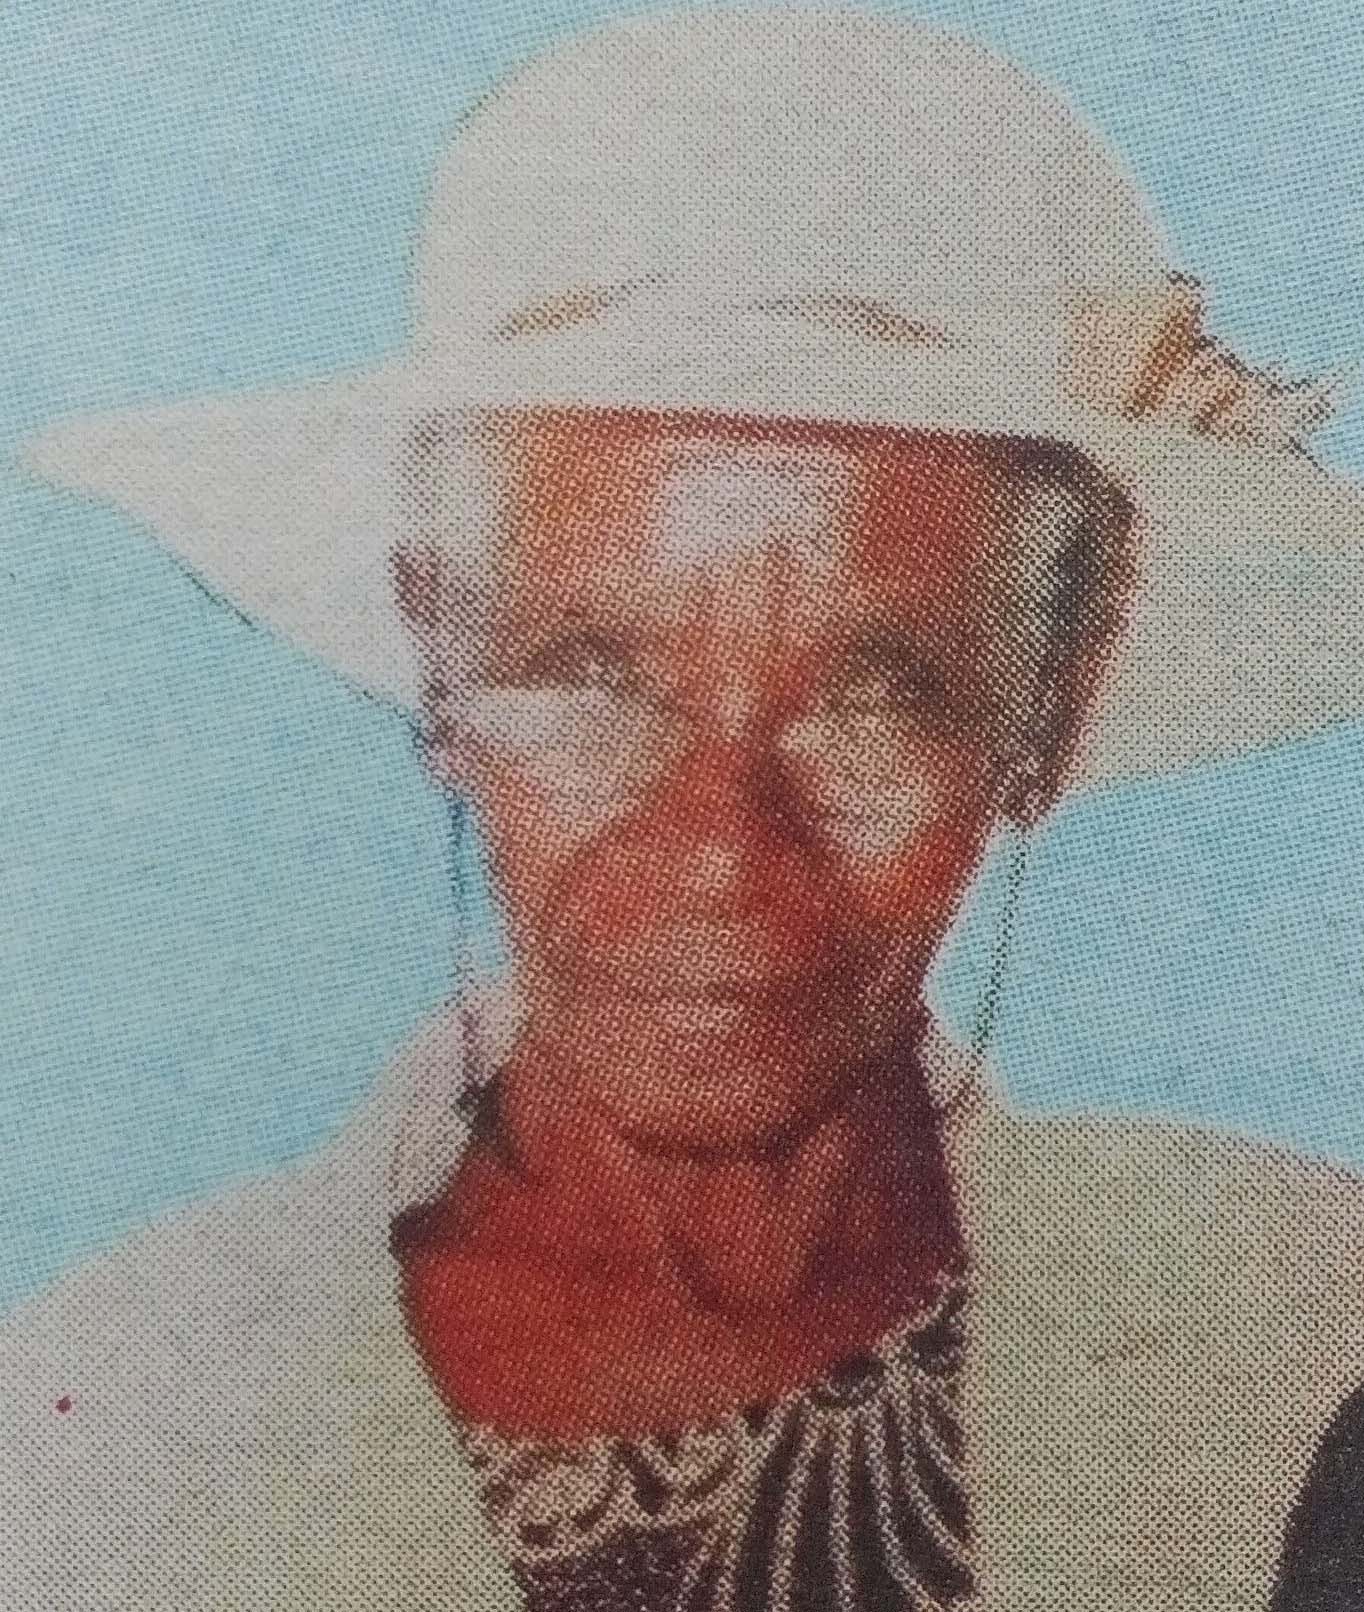 Obituary Image of Isabella Karai M'Marete